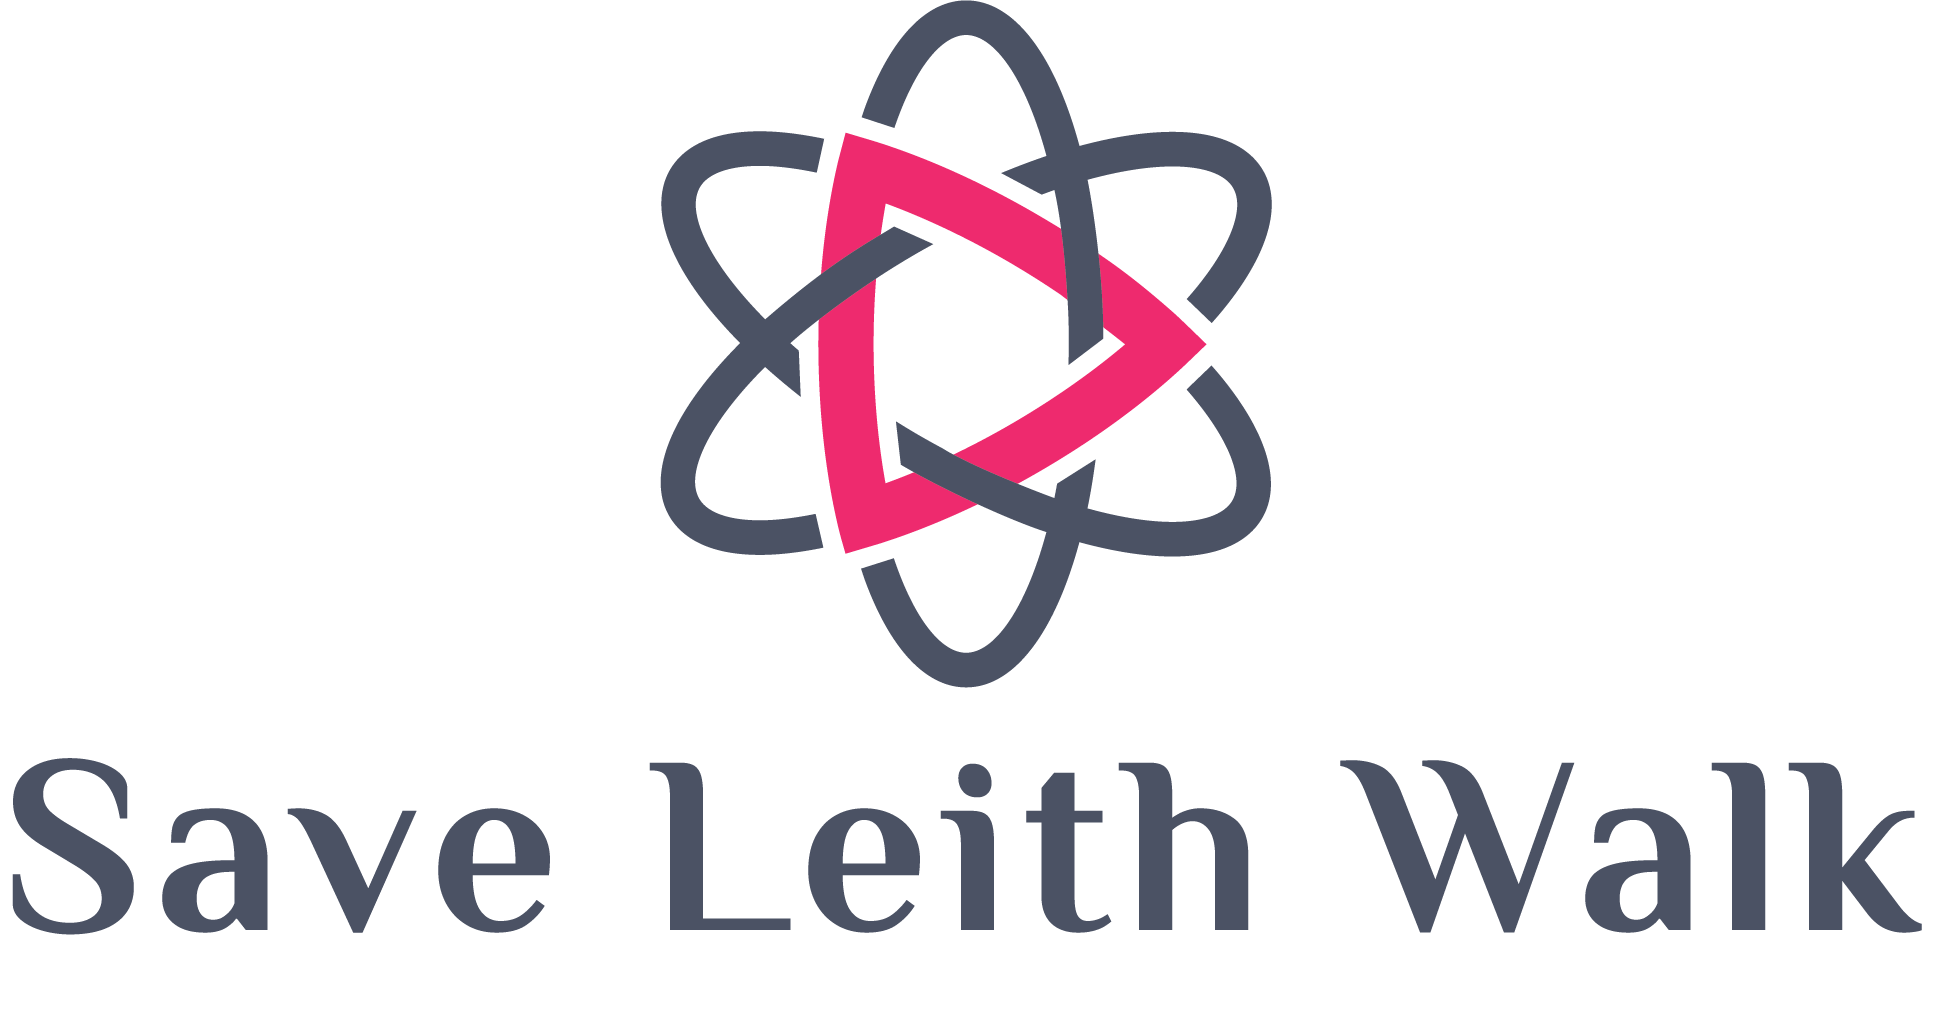 Save Leith Walk